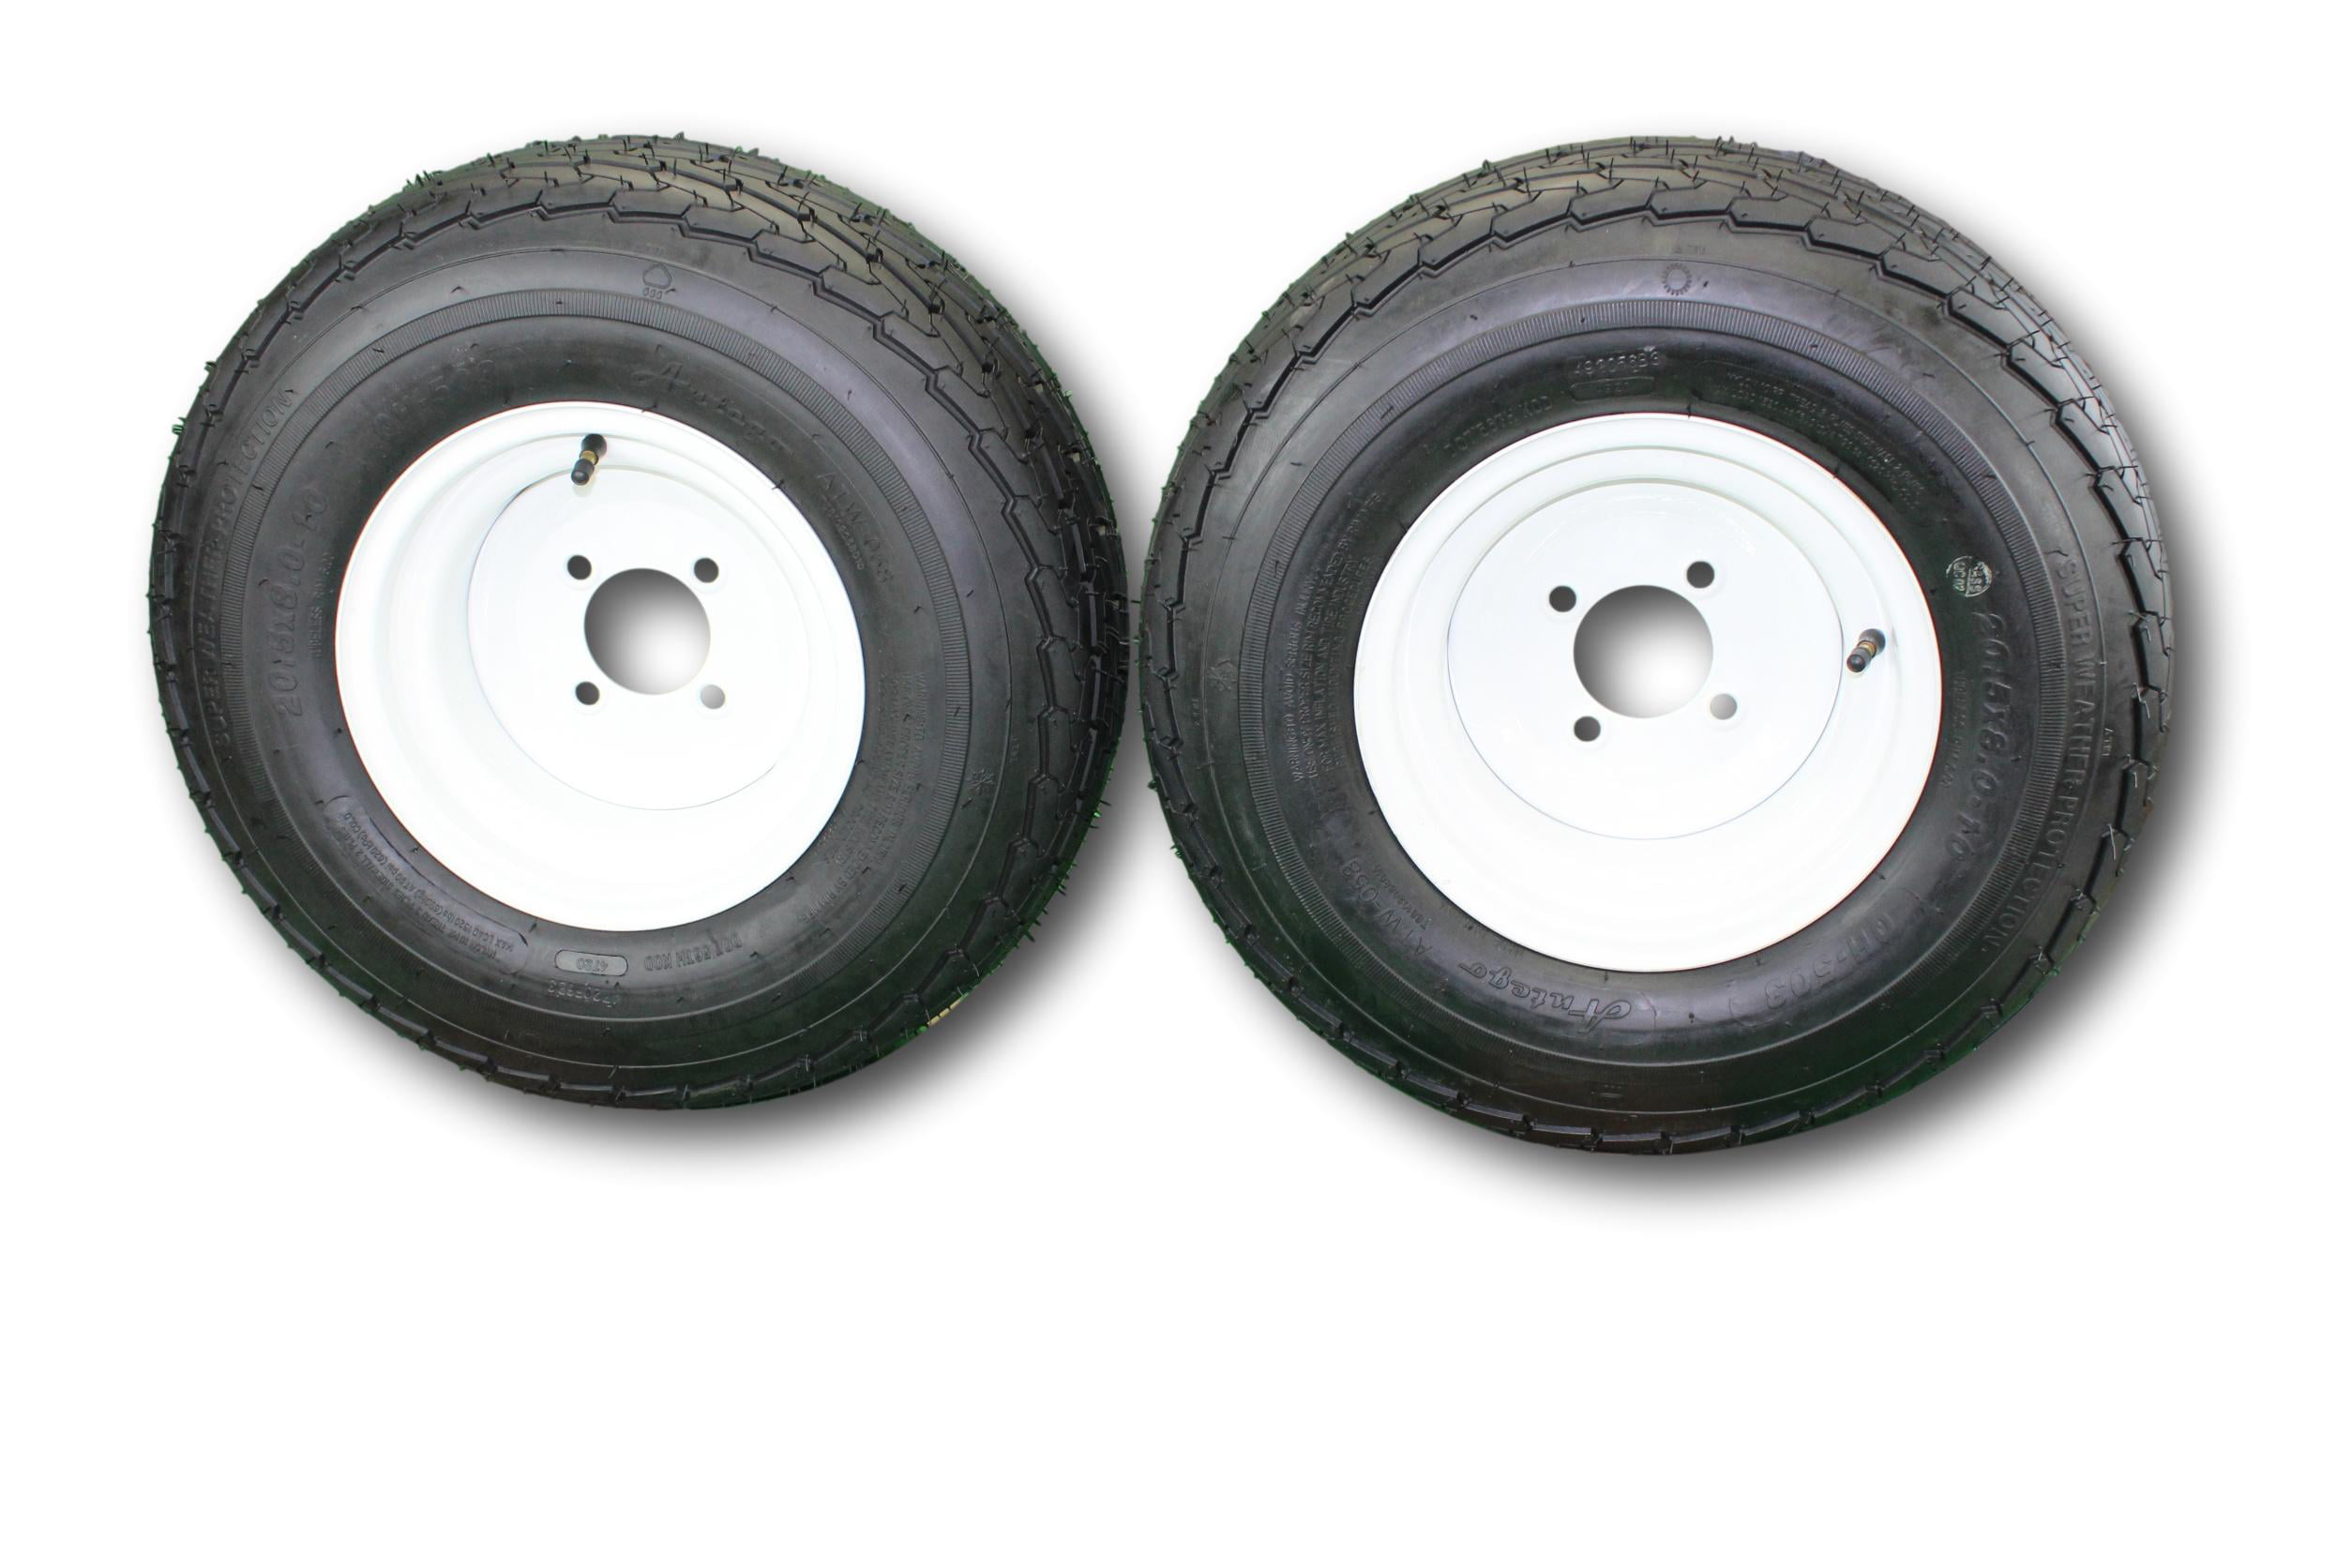 20.5X8.00-10 Loadstar Trailer Tire LRC on 5 Bolt Silver Wheel 205/65-10 6 Ply 